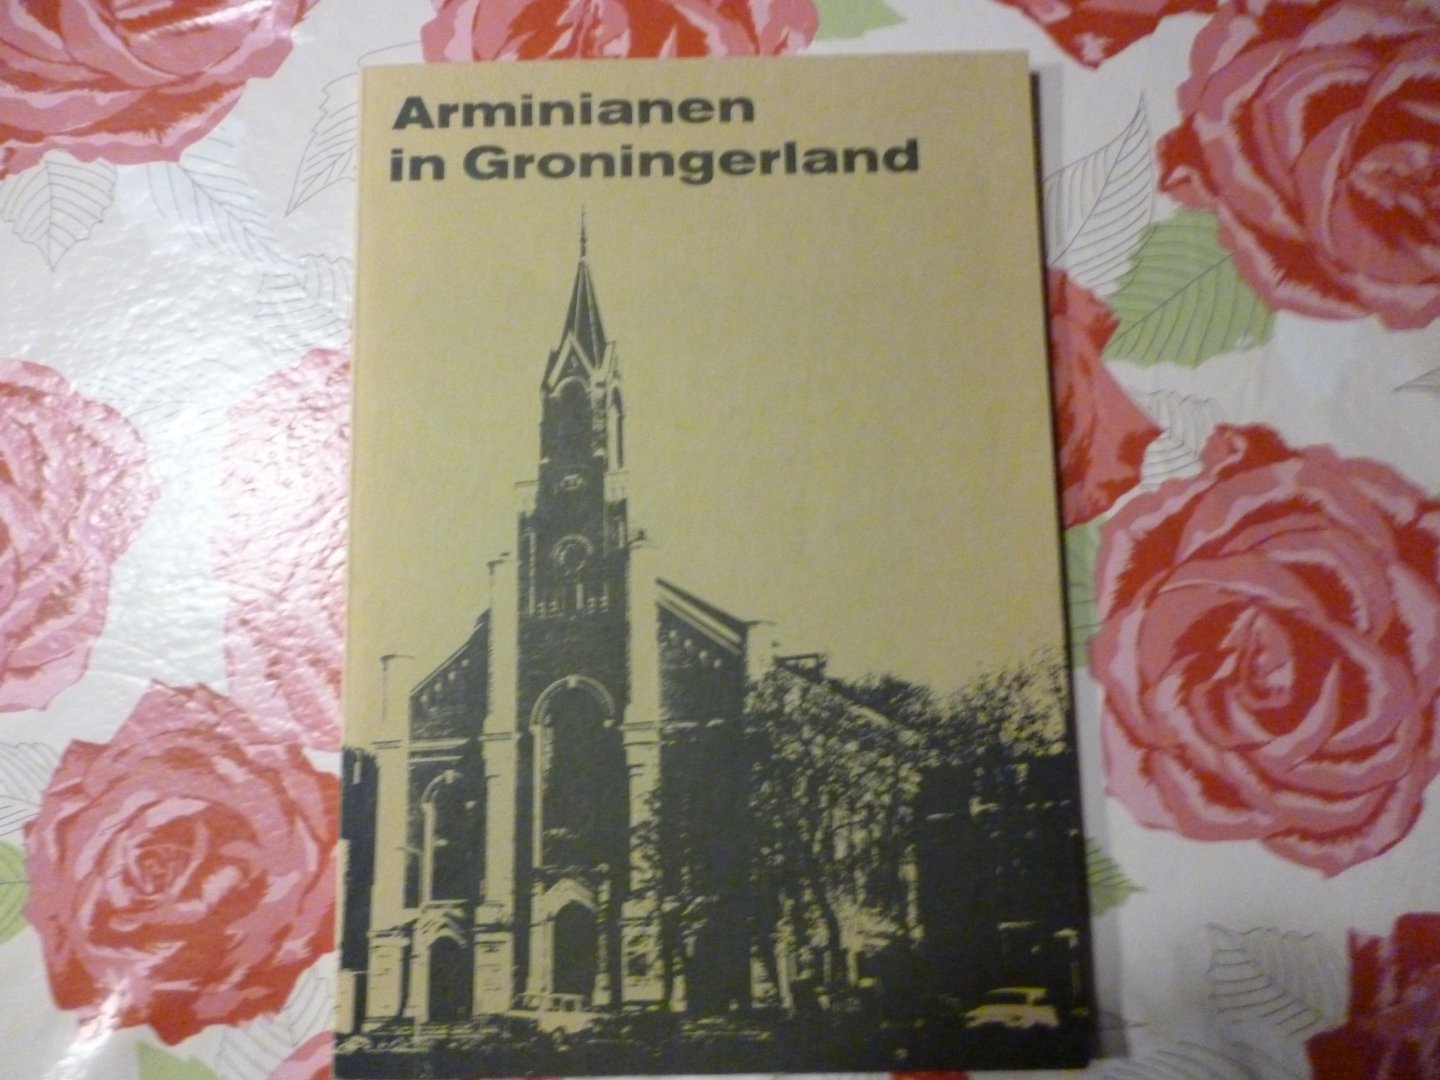 kerkenraad remonstrantse gemeente - Arminianen in Groningerland